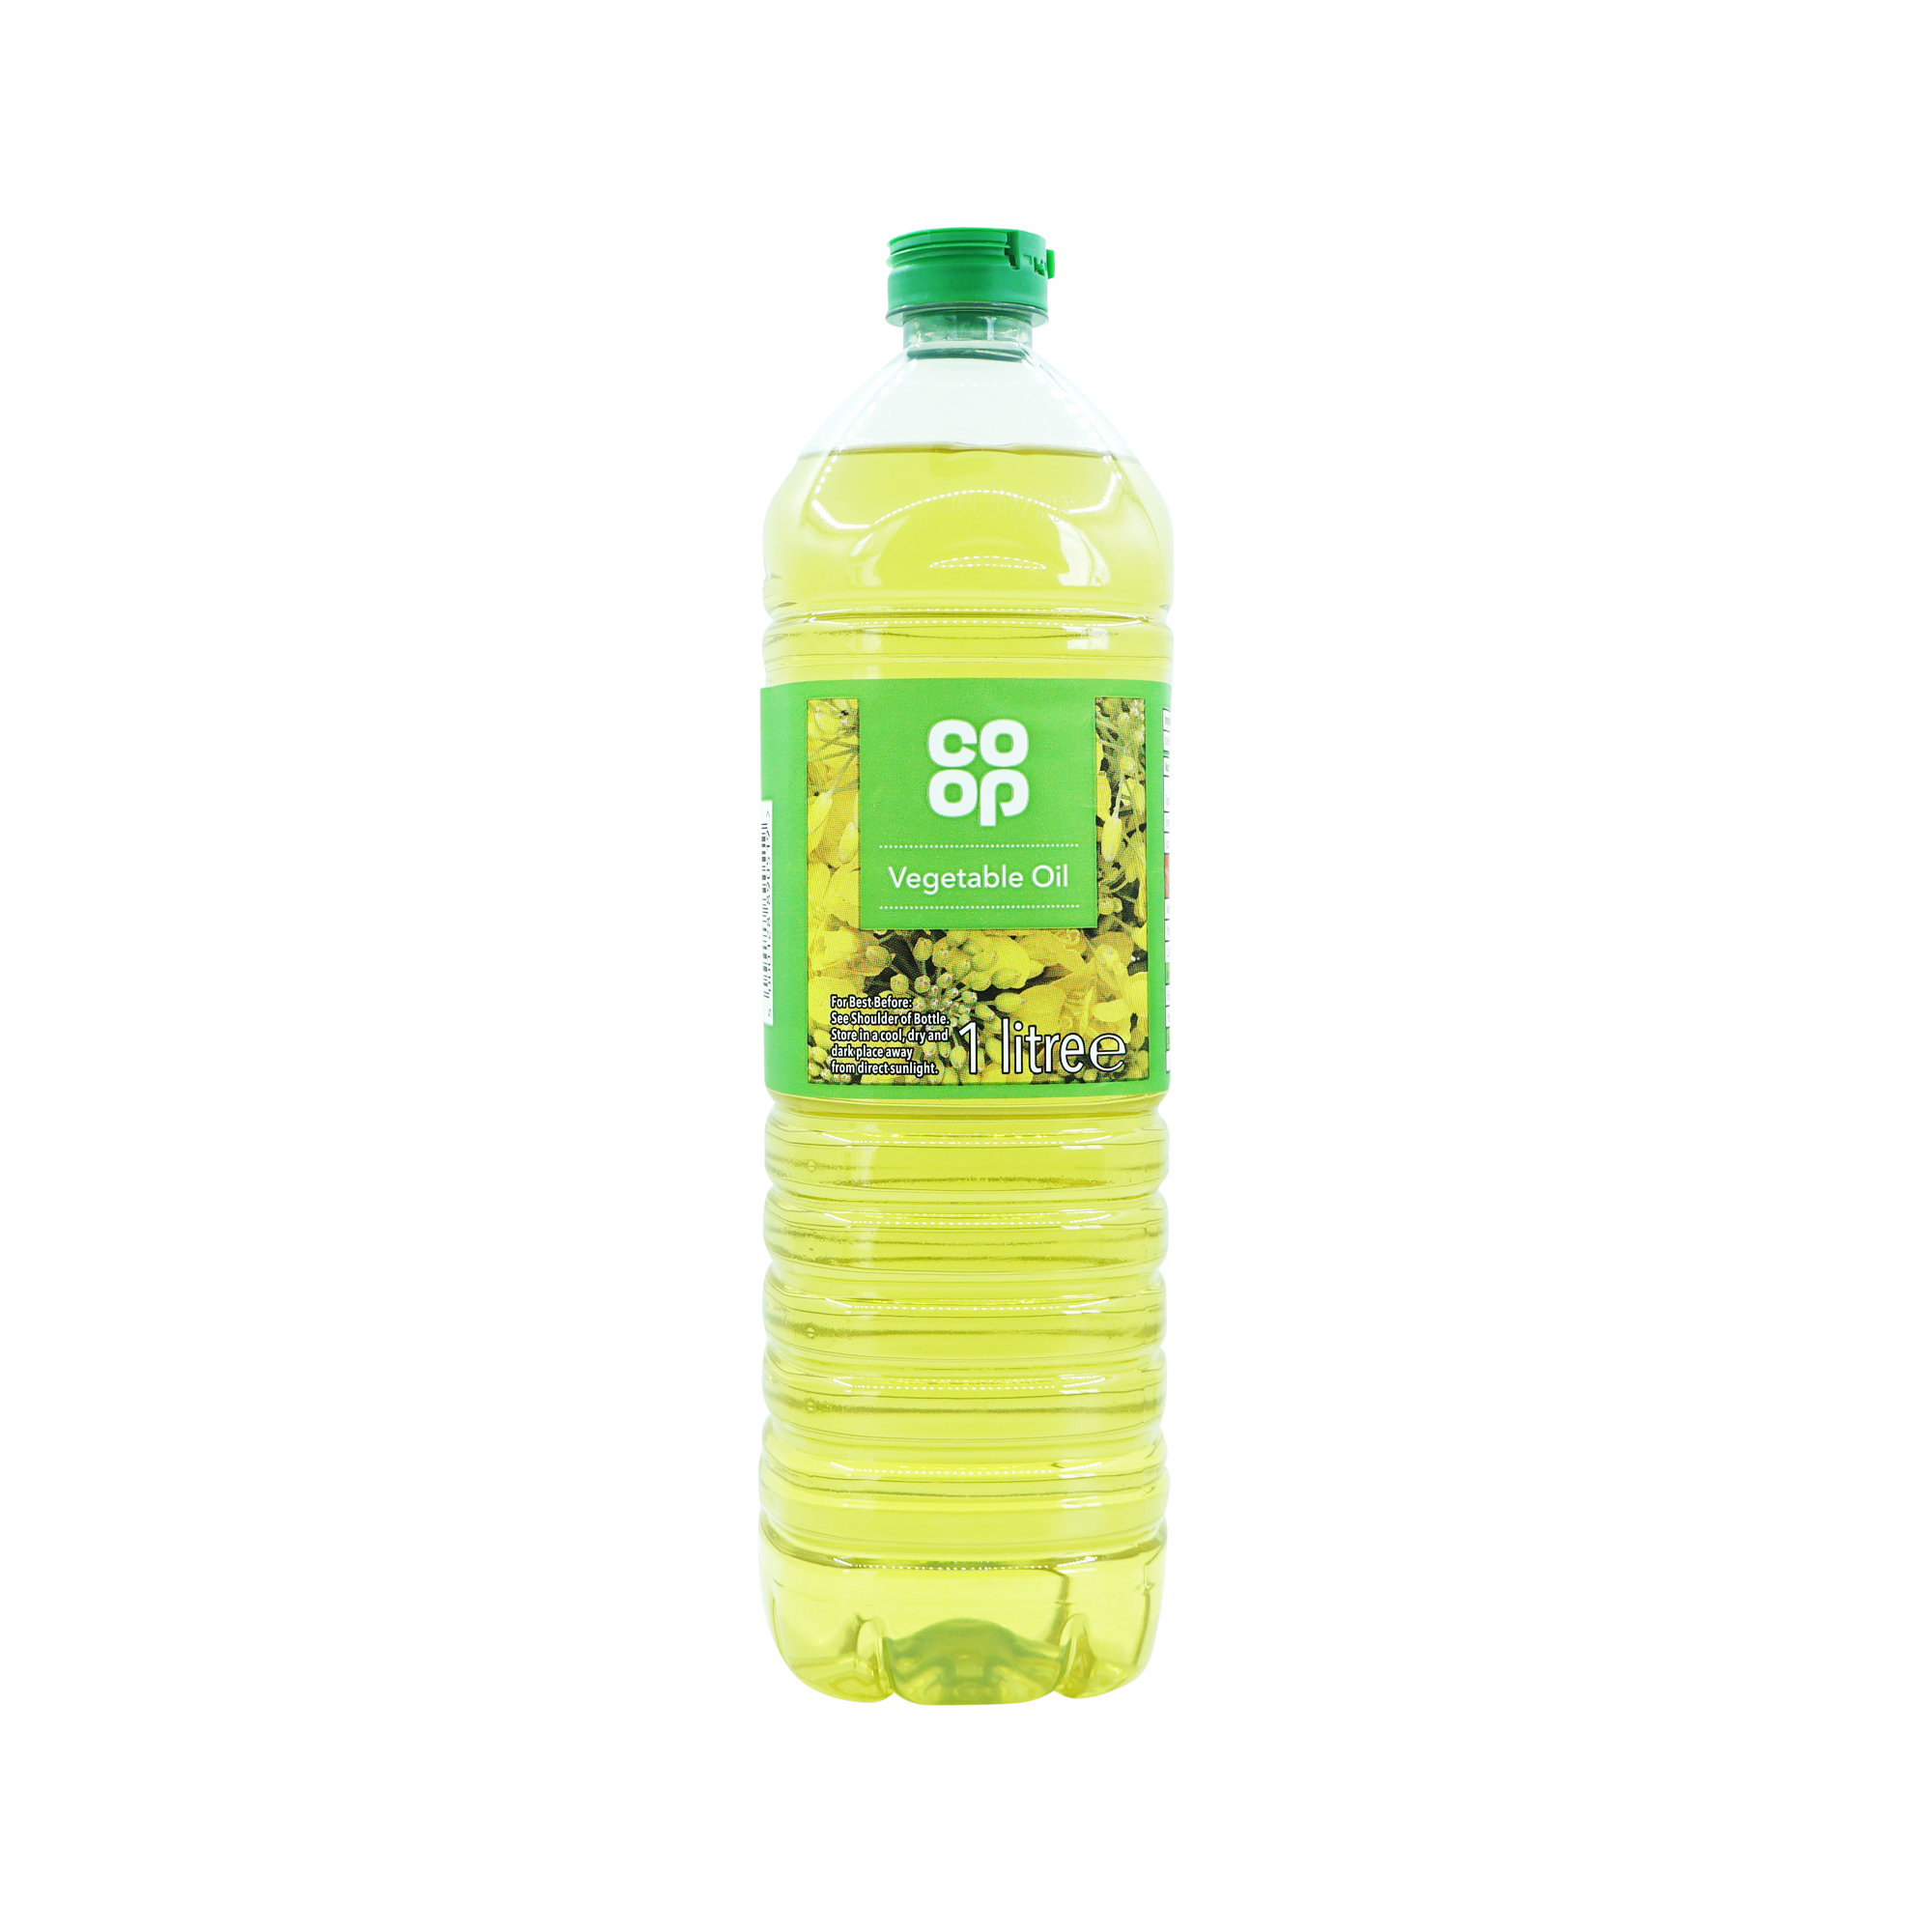 Co-op Vegetable Oil 1L